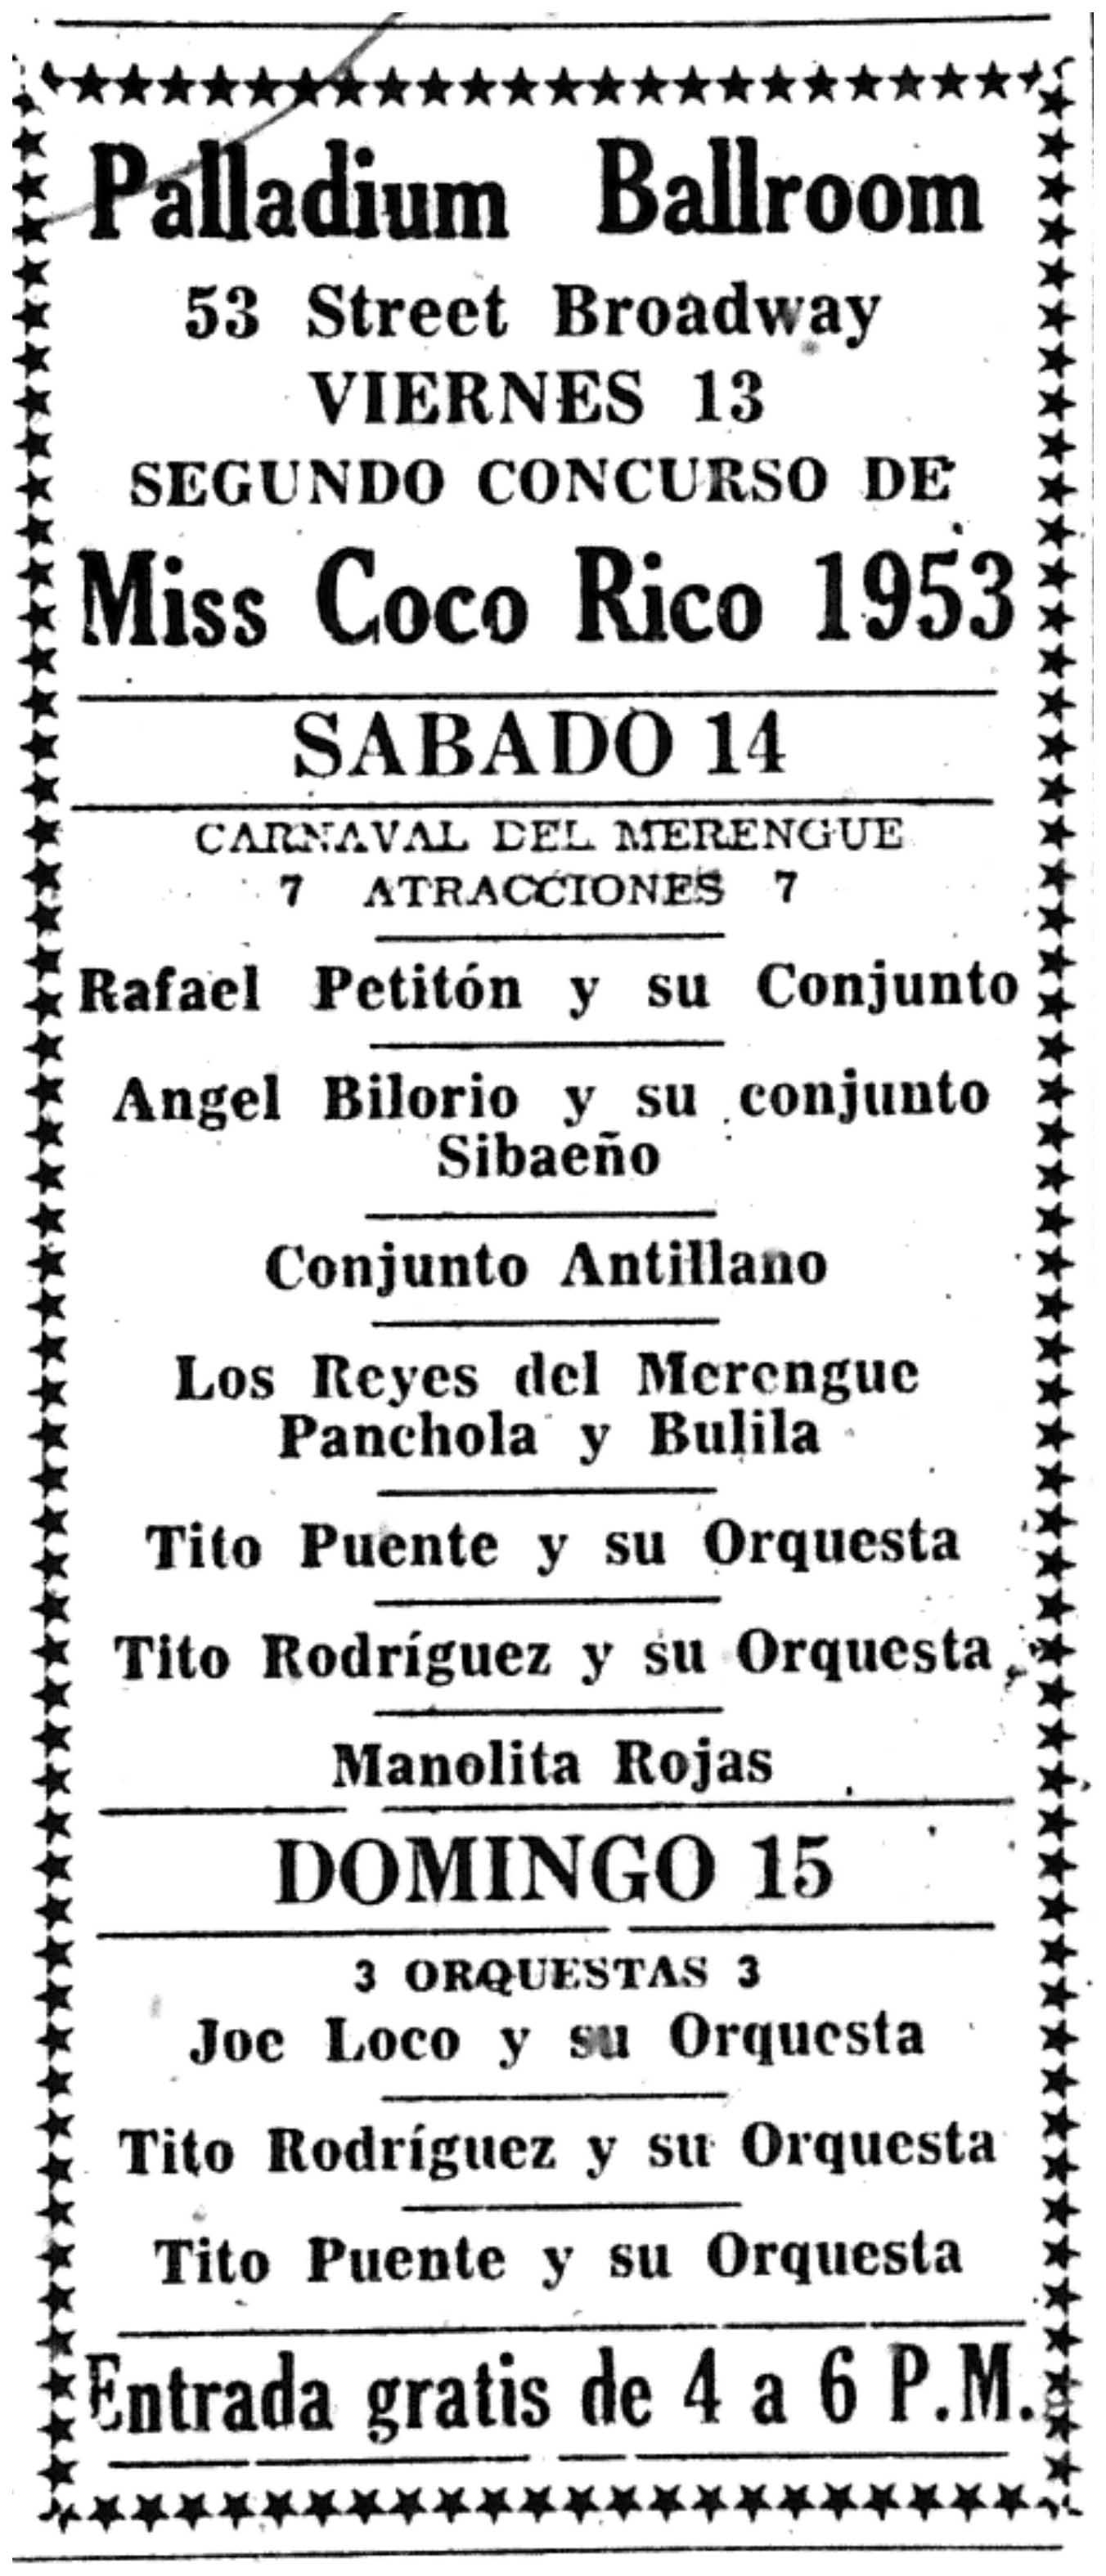 Advertisement for Merengue Carnival at Palladium Ballroom, March 14,1953